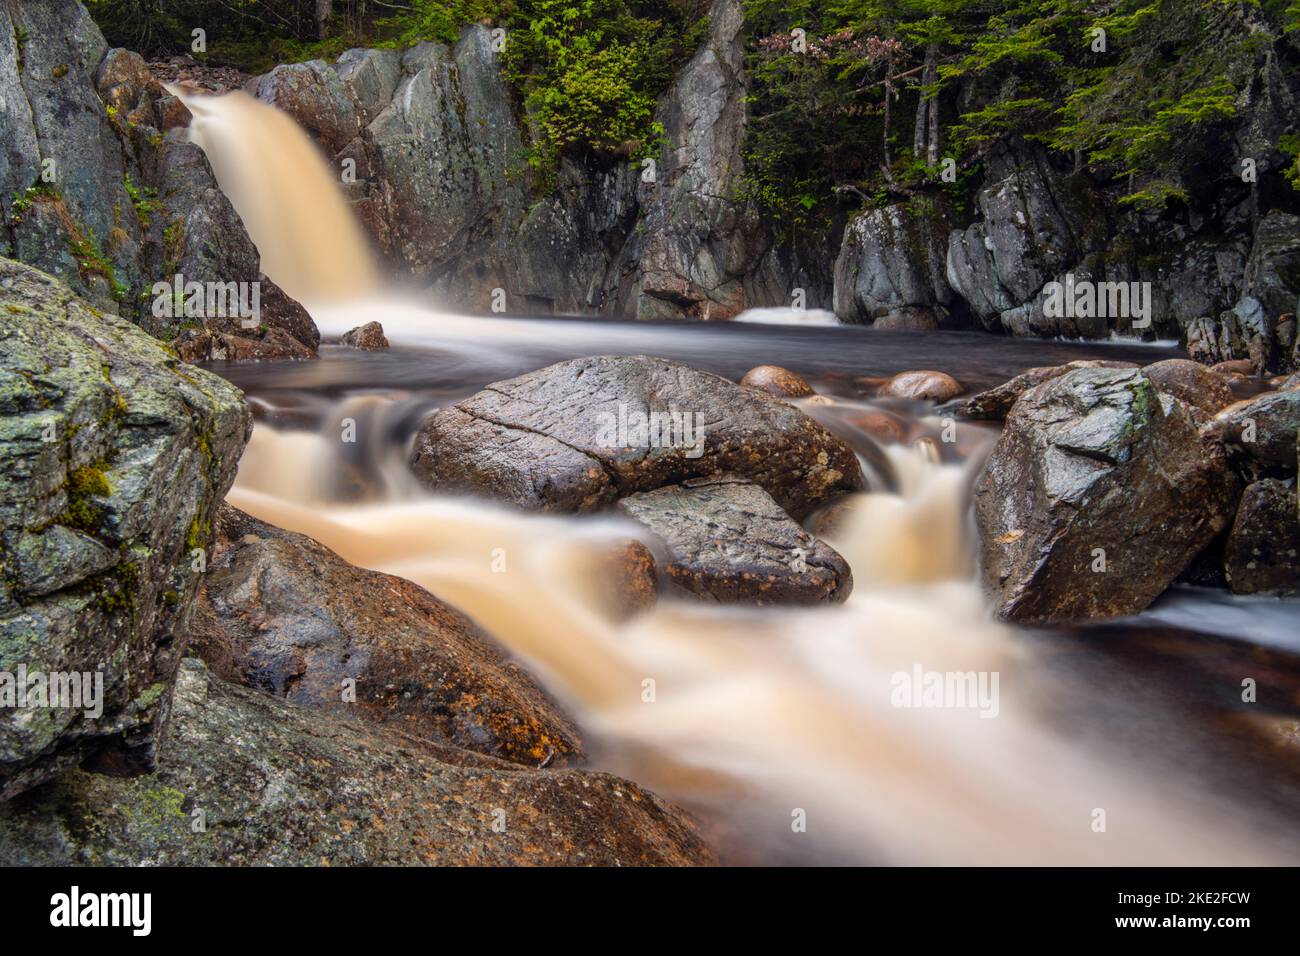 Rushing water and polished rocks at Small Falls, J.T. Cheeseman Provincial Park, Newfoundland and Labrador NL, Canada Stock Photo